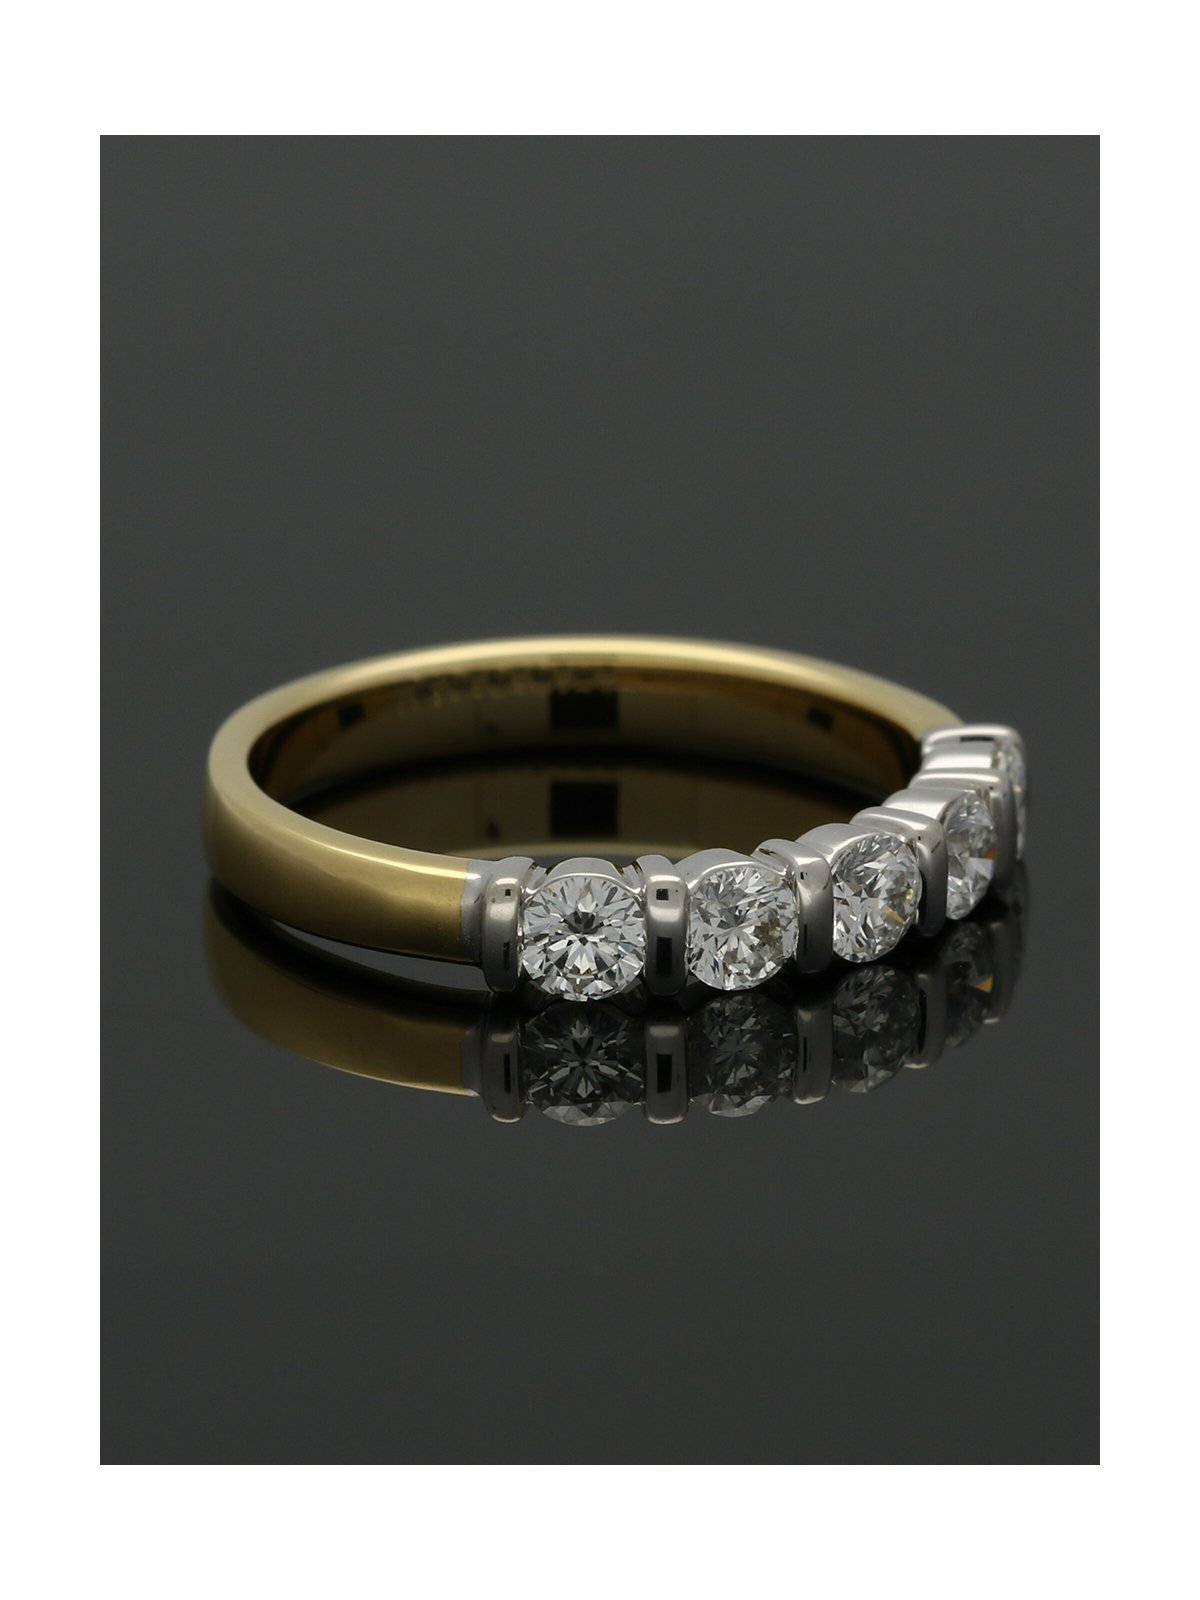 Five Stone Diamond Ring 0.75ct Round Brilliant Cut in 18ct Yellow & White Gold